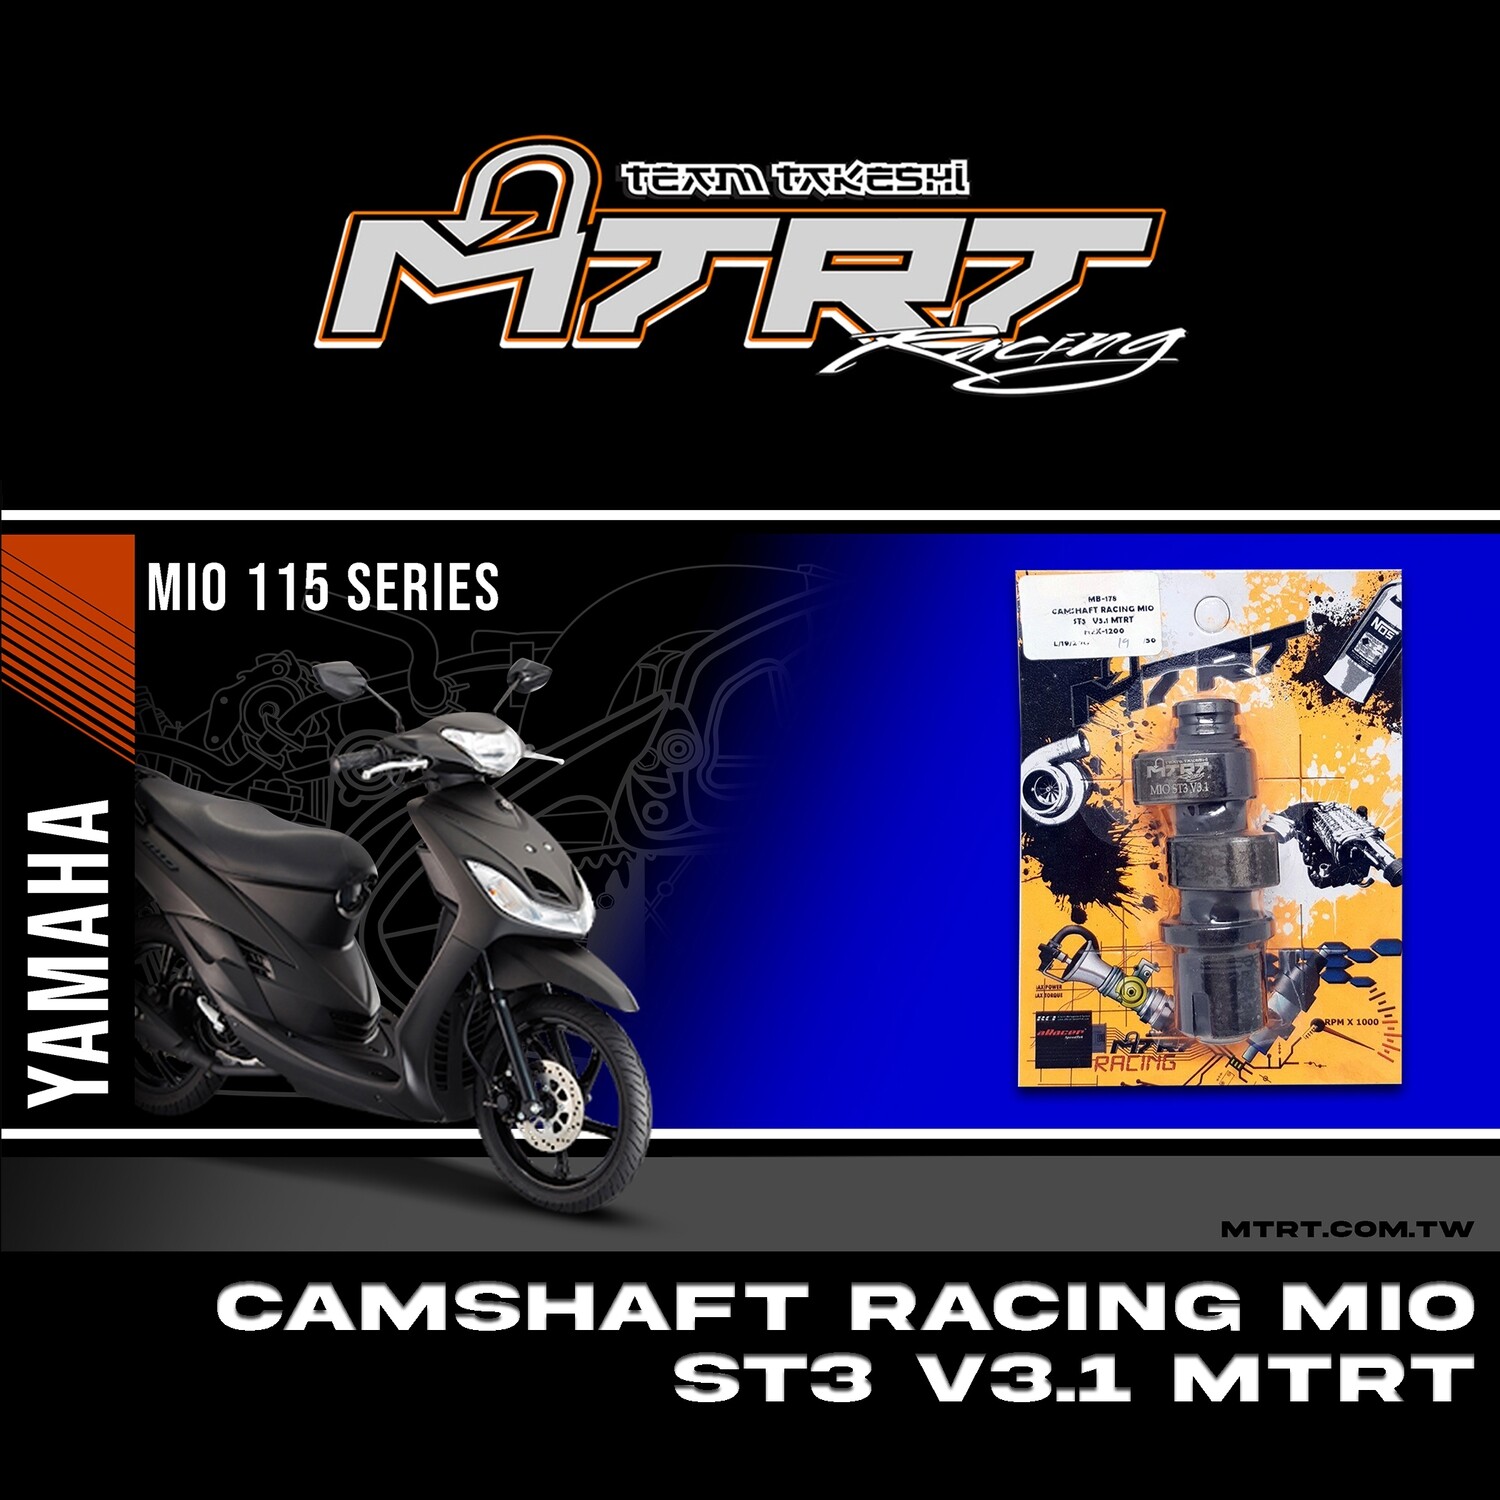 CAMSHAFT RACING MIO ST3 V3.1 MTRT